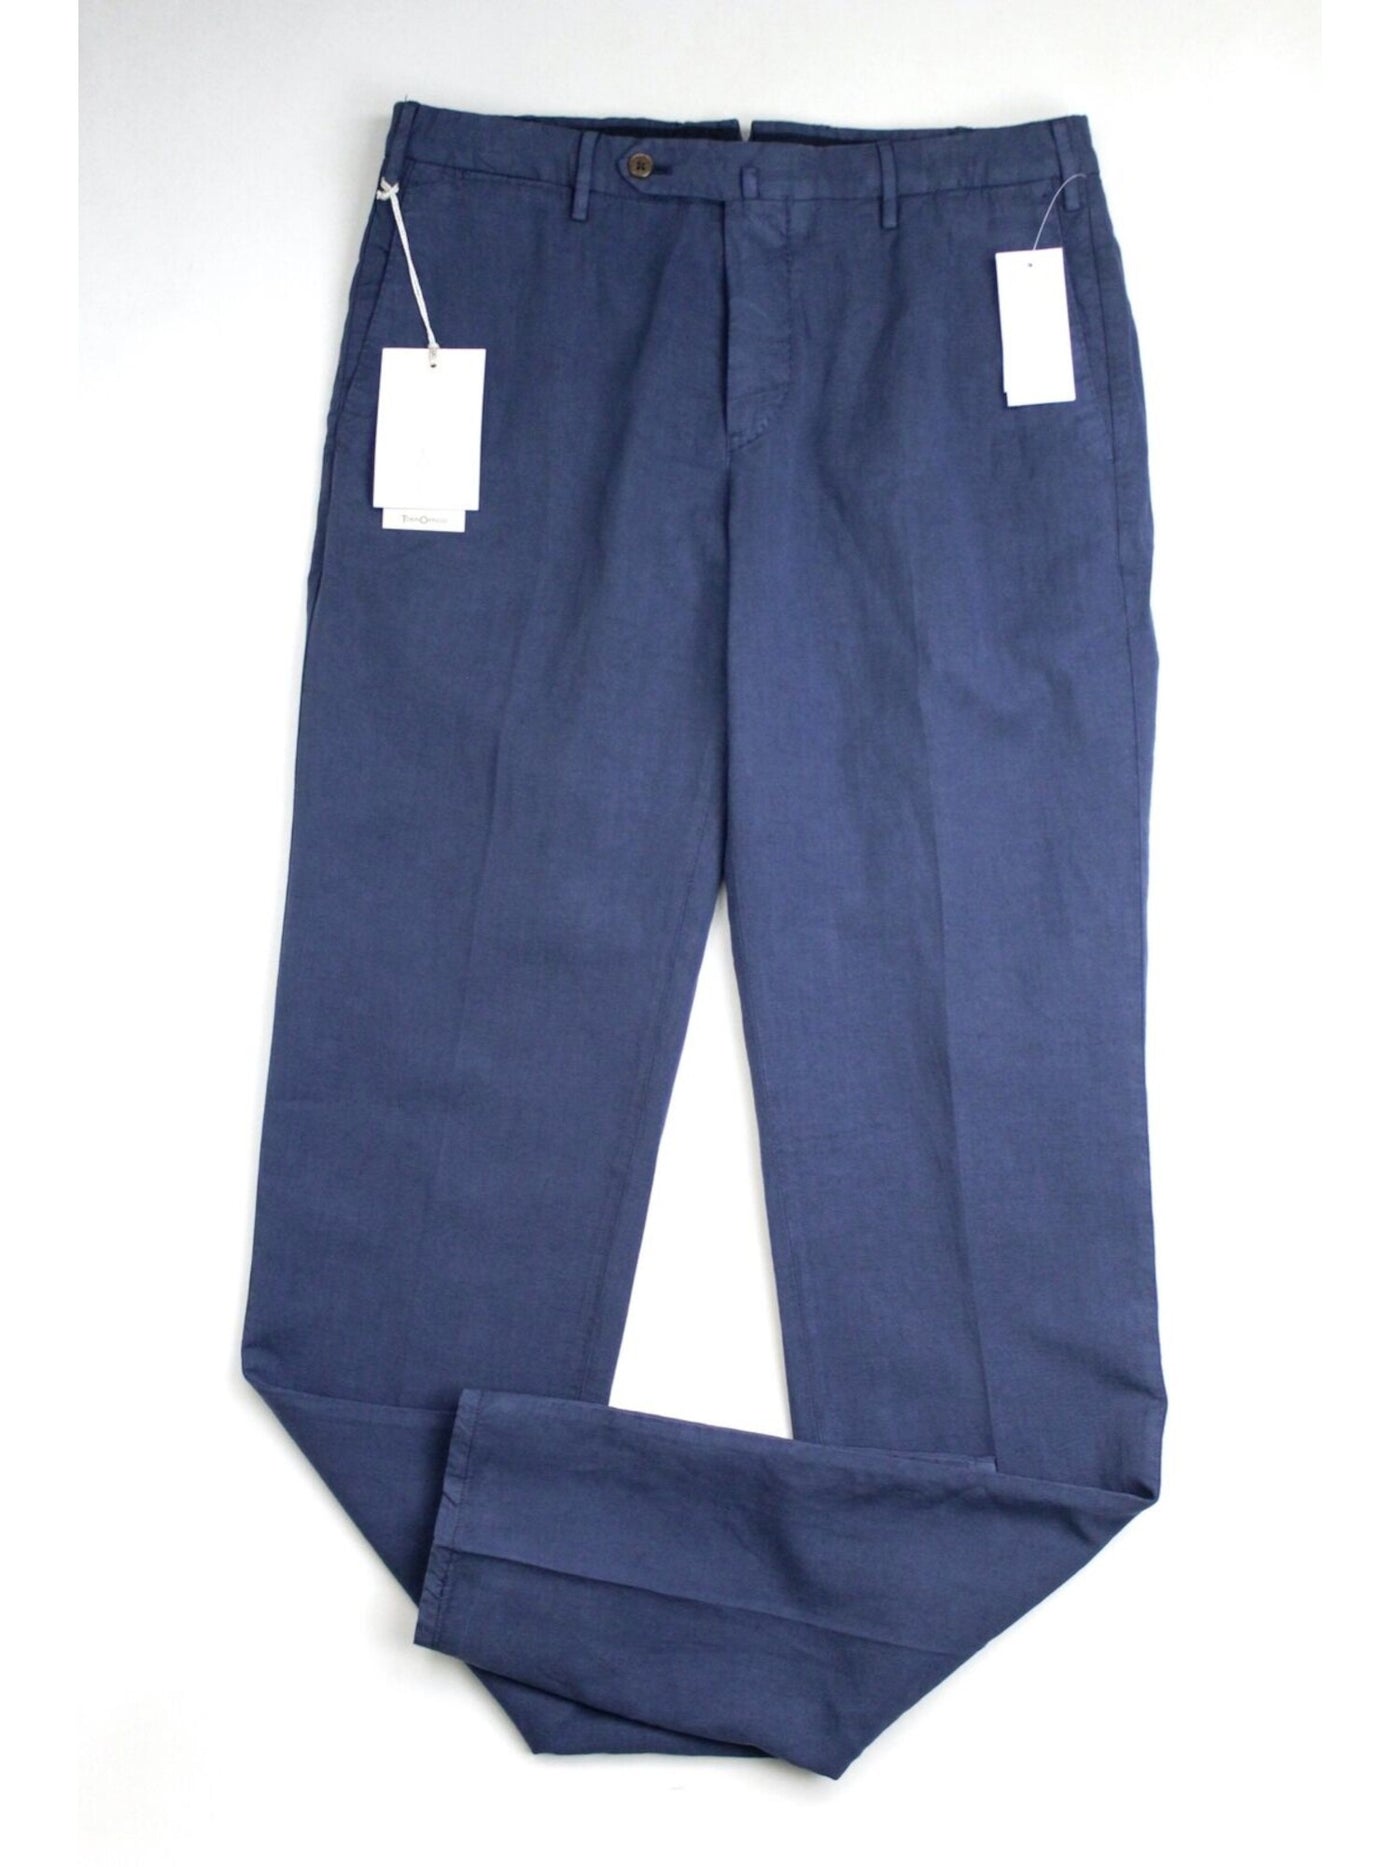 TORIN OPIFICIO Mens Blue Regular Fit Pants 54